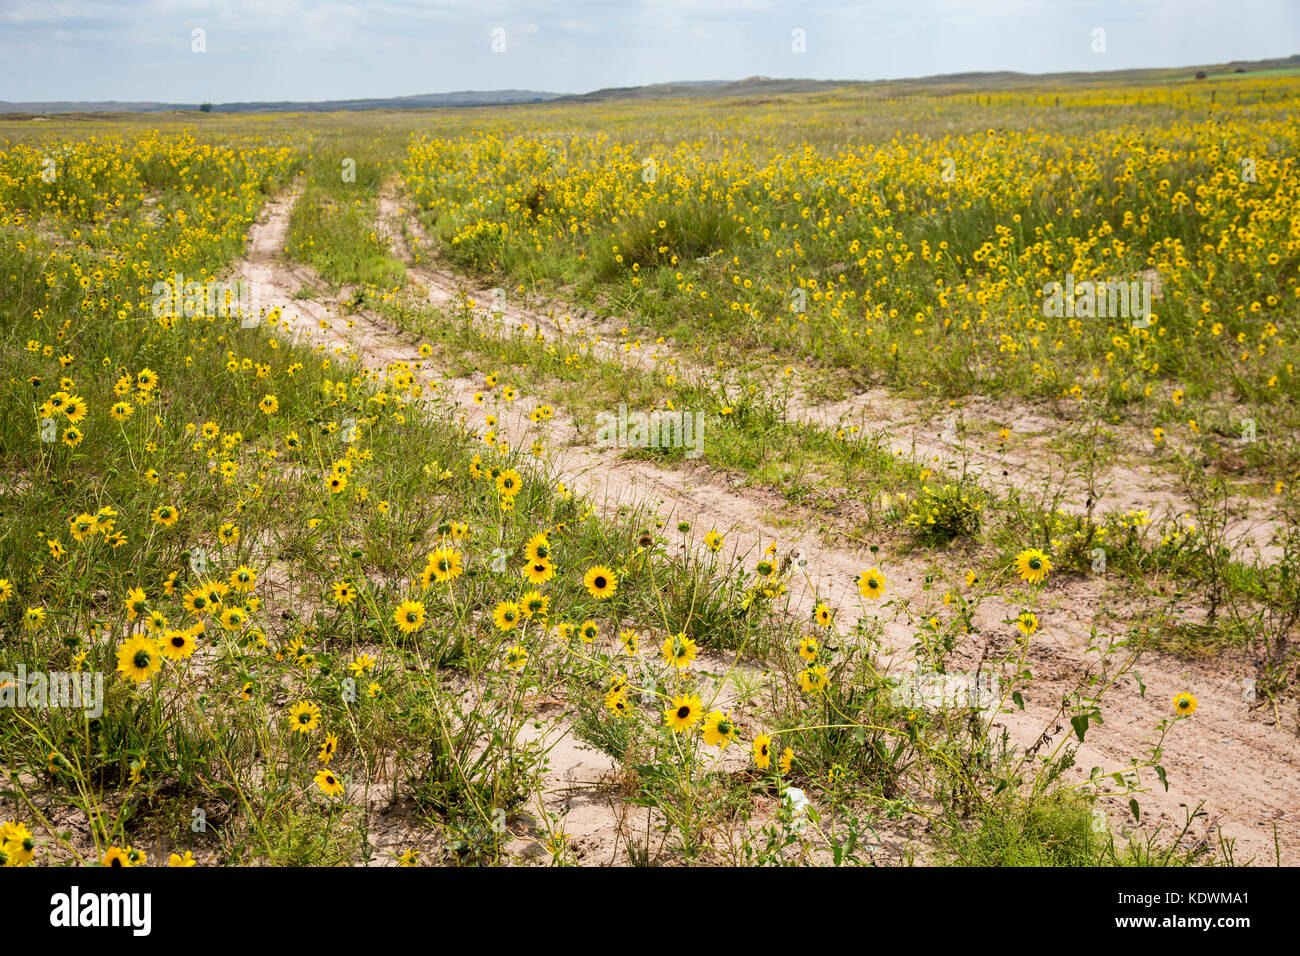 Tryon, Nebraska - Sunflowers growing along a dirt road in the Nebraska Sandhills. Stock Photo